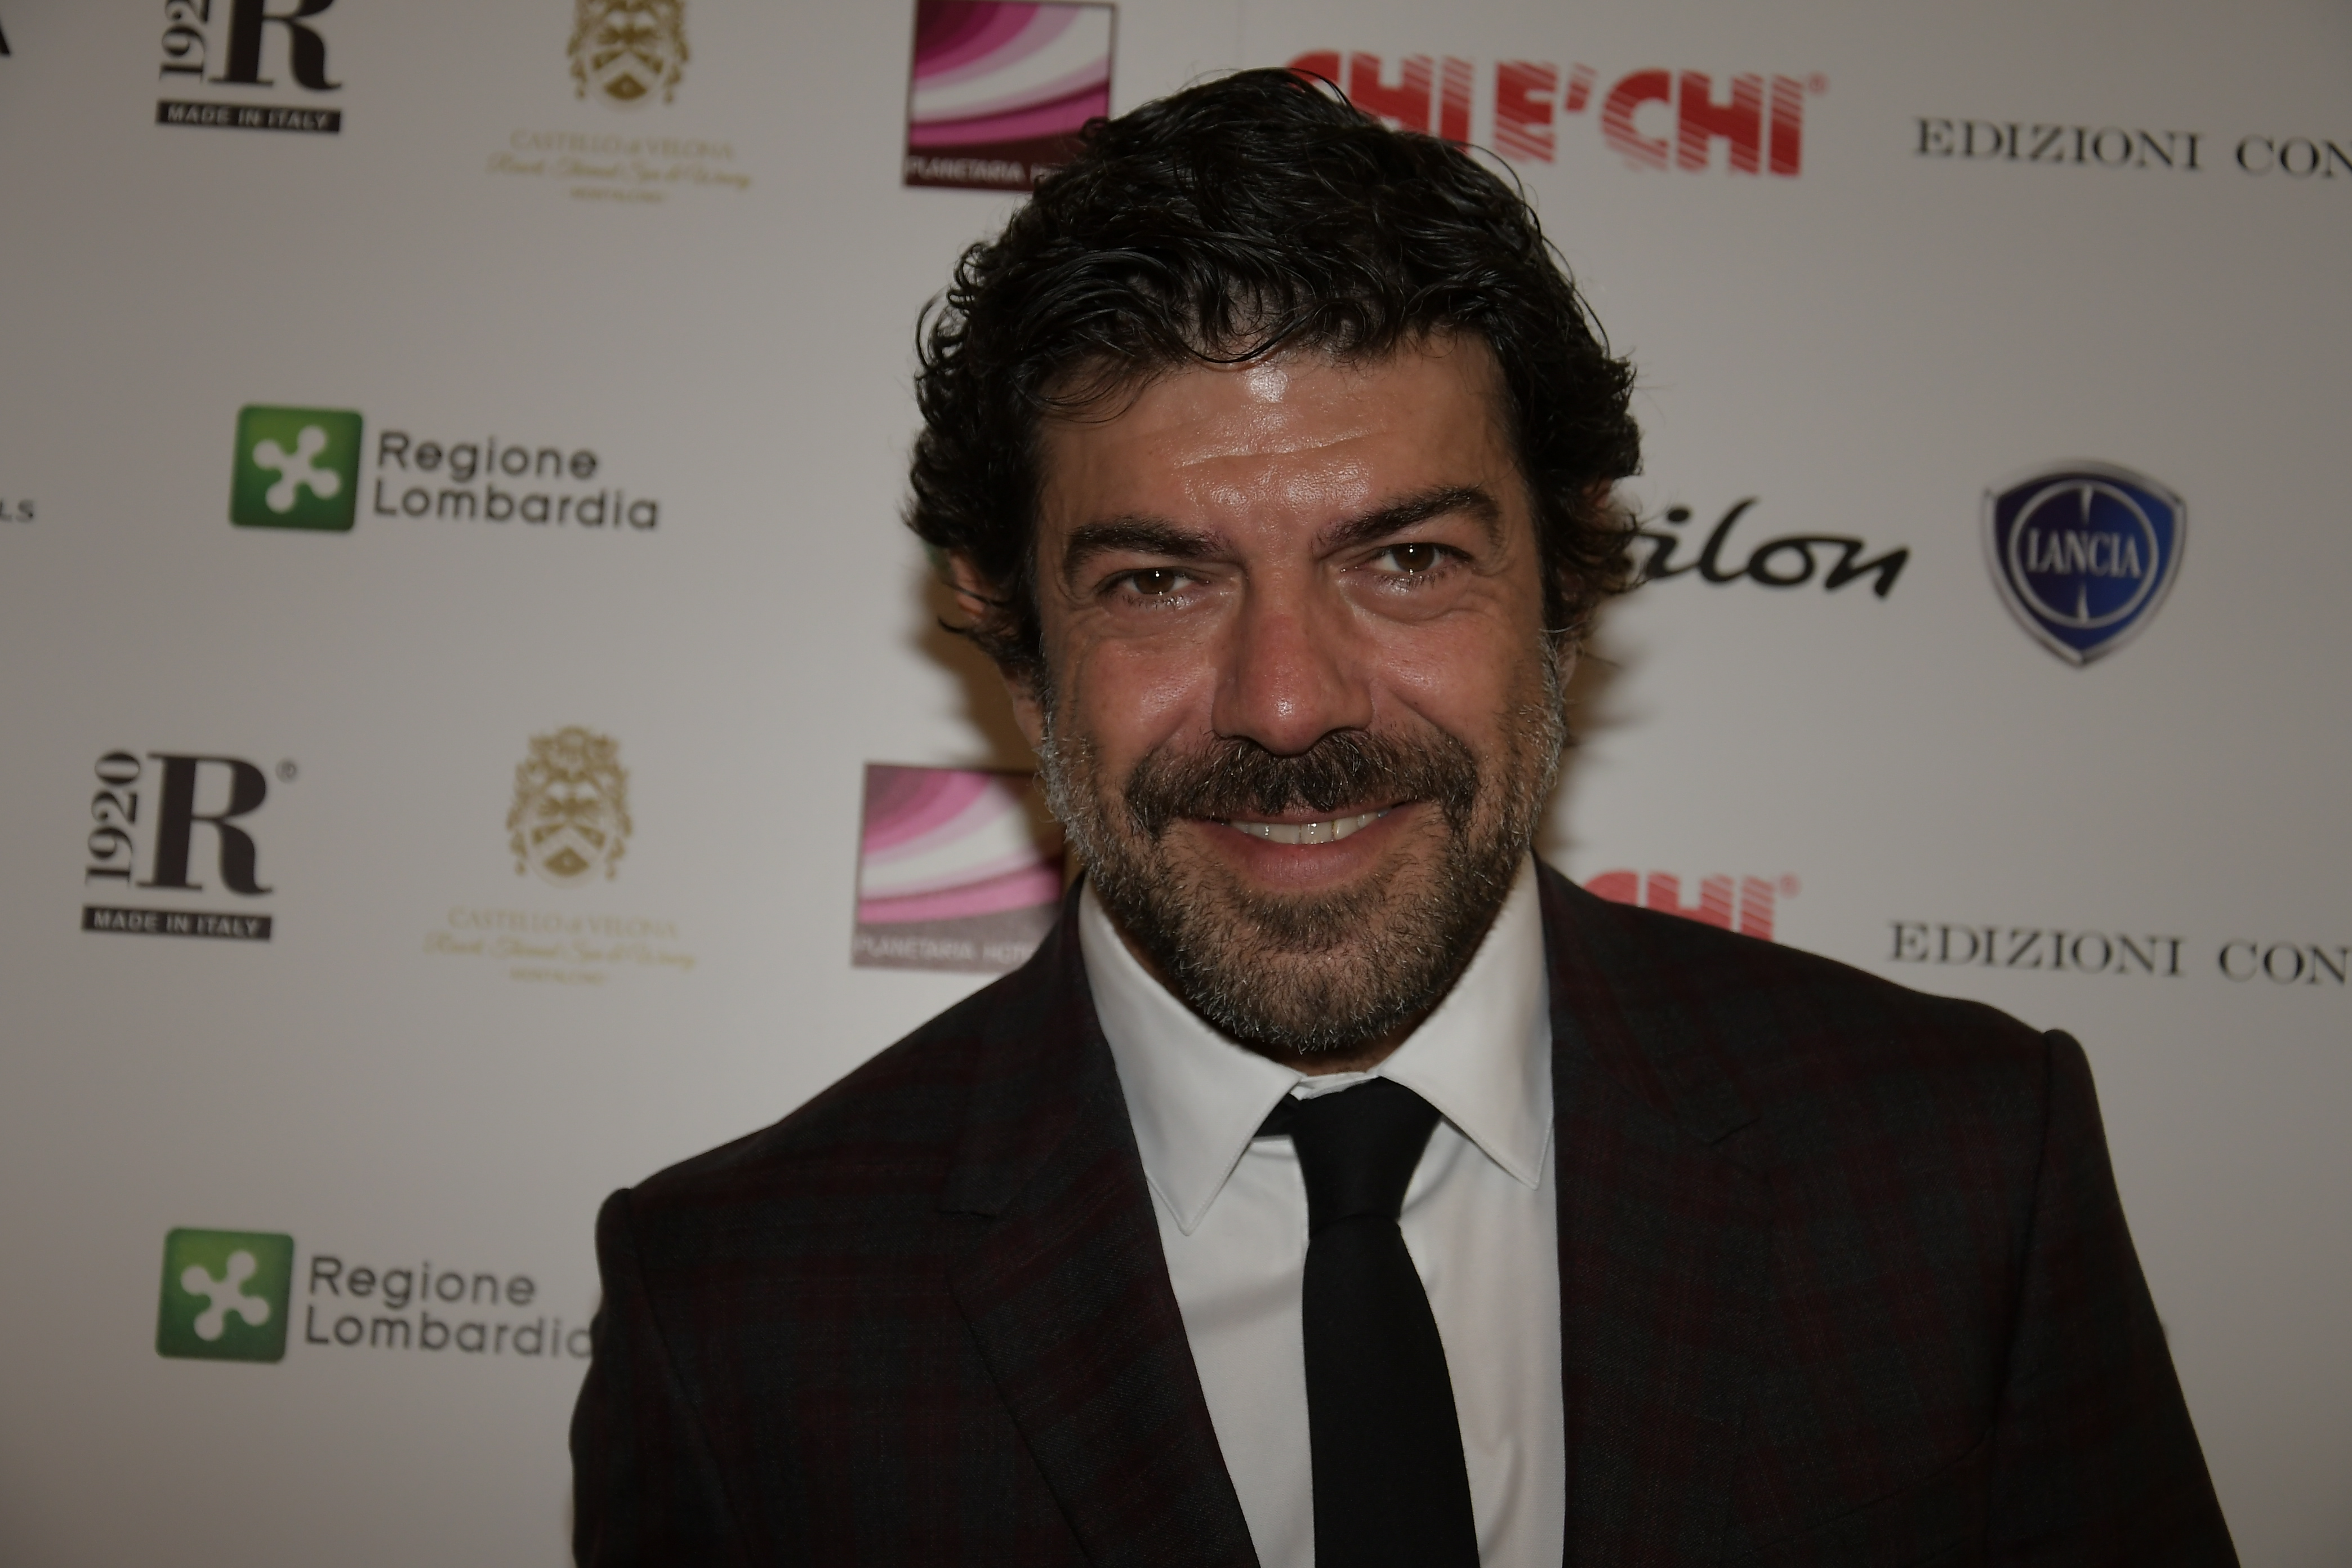 Pier Francesco Savino al Chi è Chi Awards